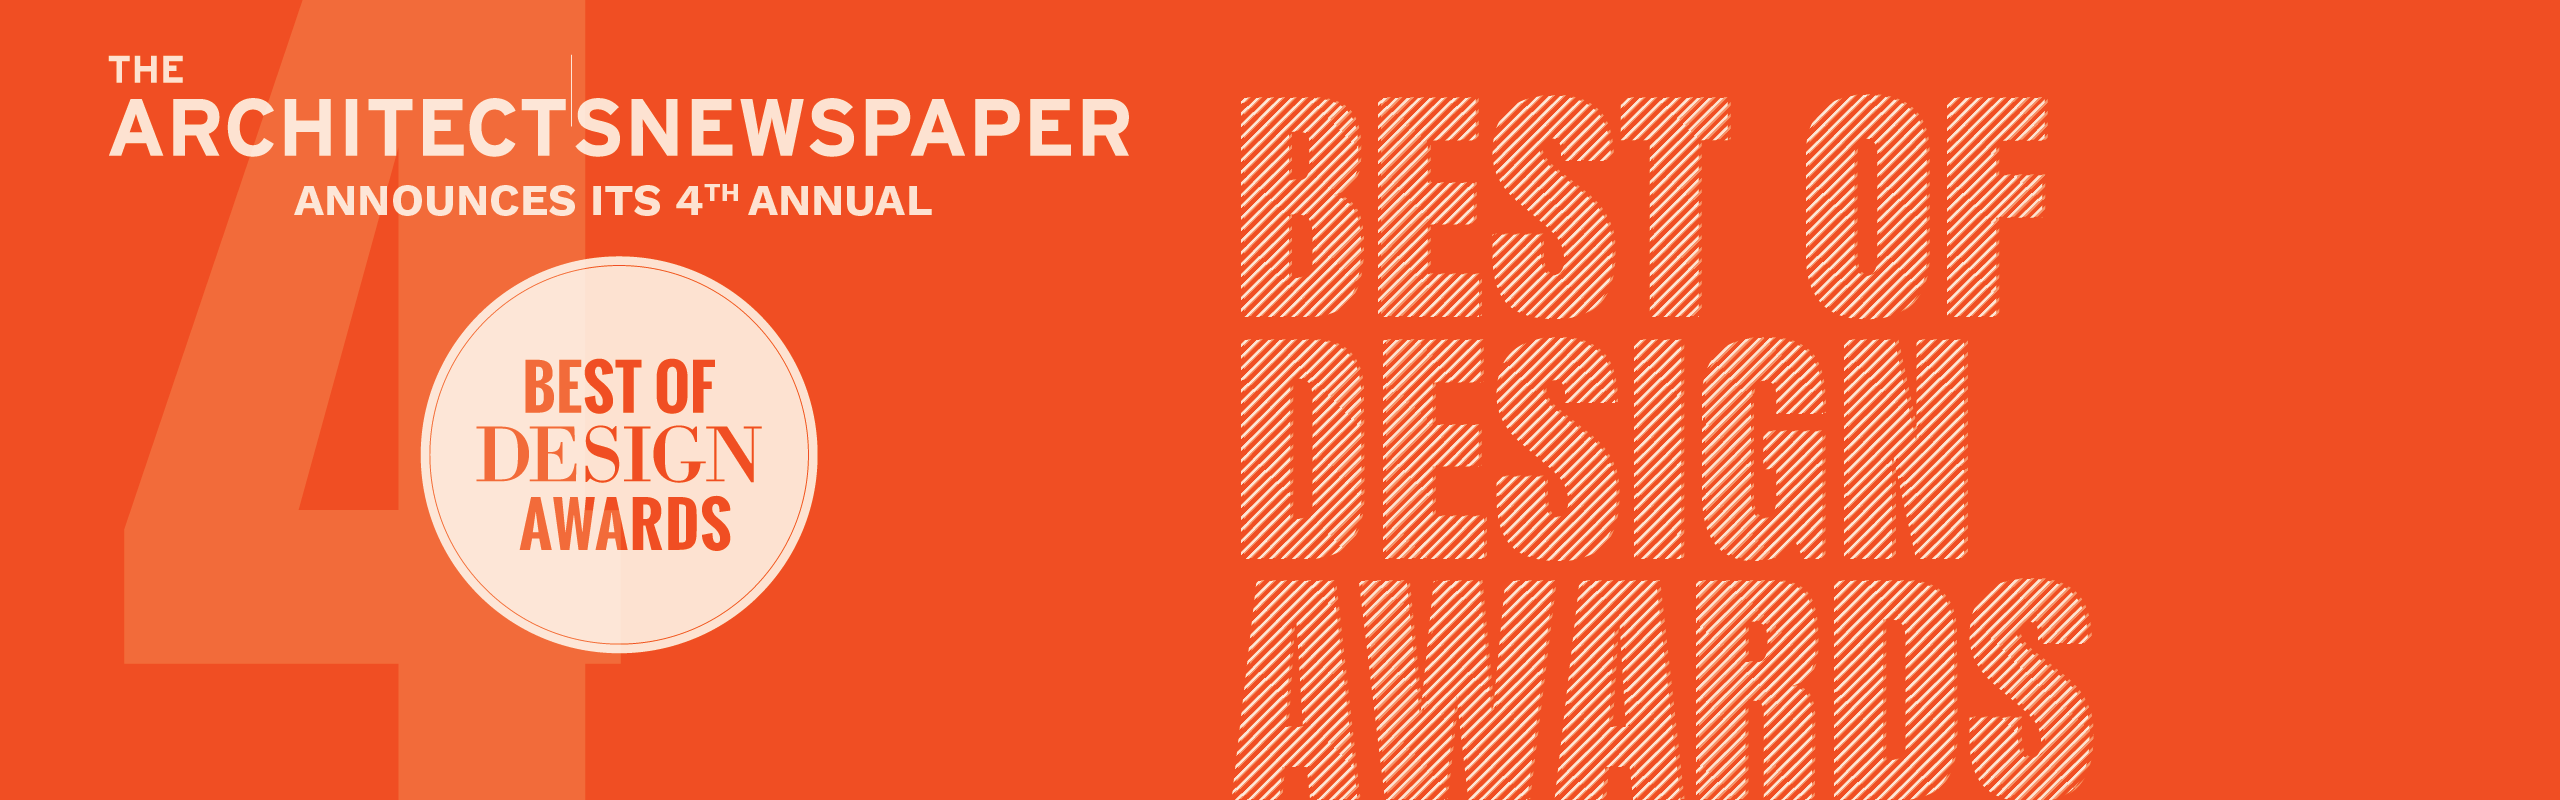 2016 Best of Design Award for Architectural Representation